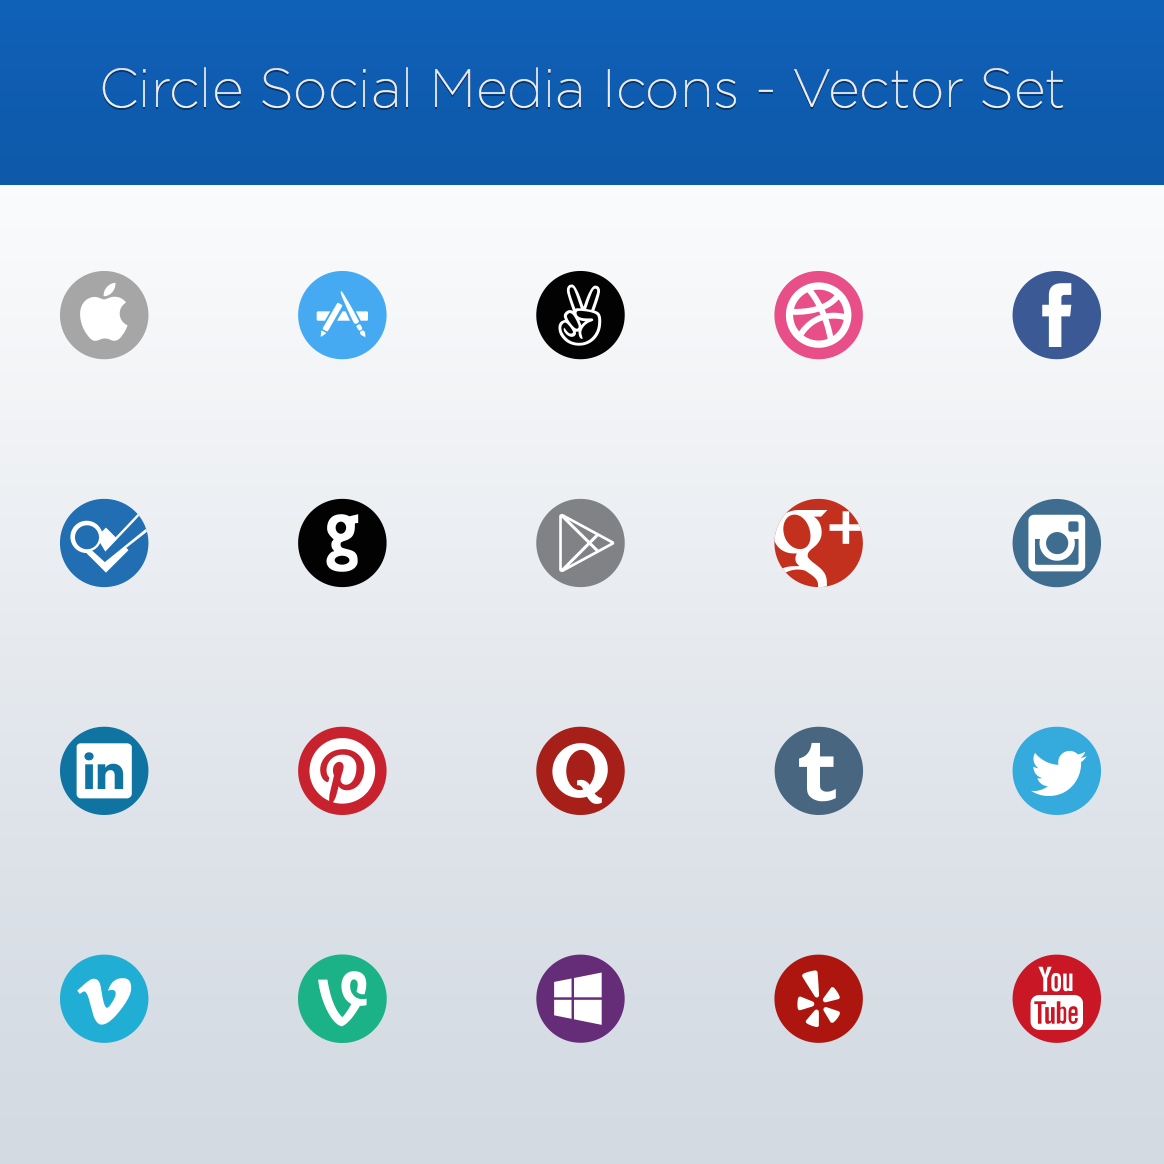 Blaty Sax Videos Com - Circle Social Media Icons â€“ Vector Set | Garrett Gee